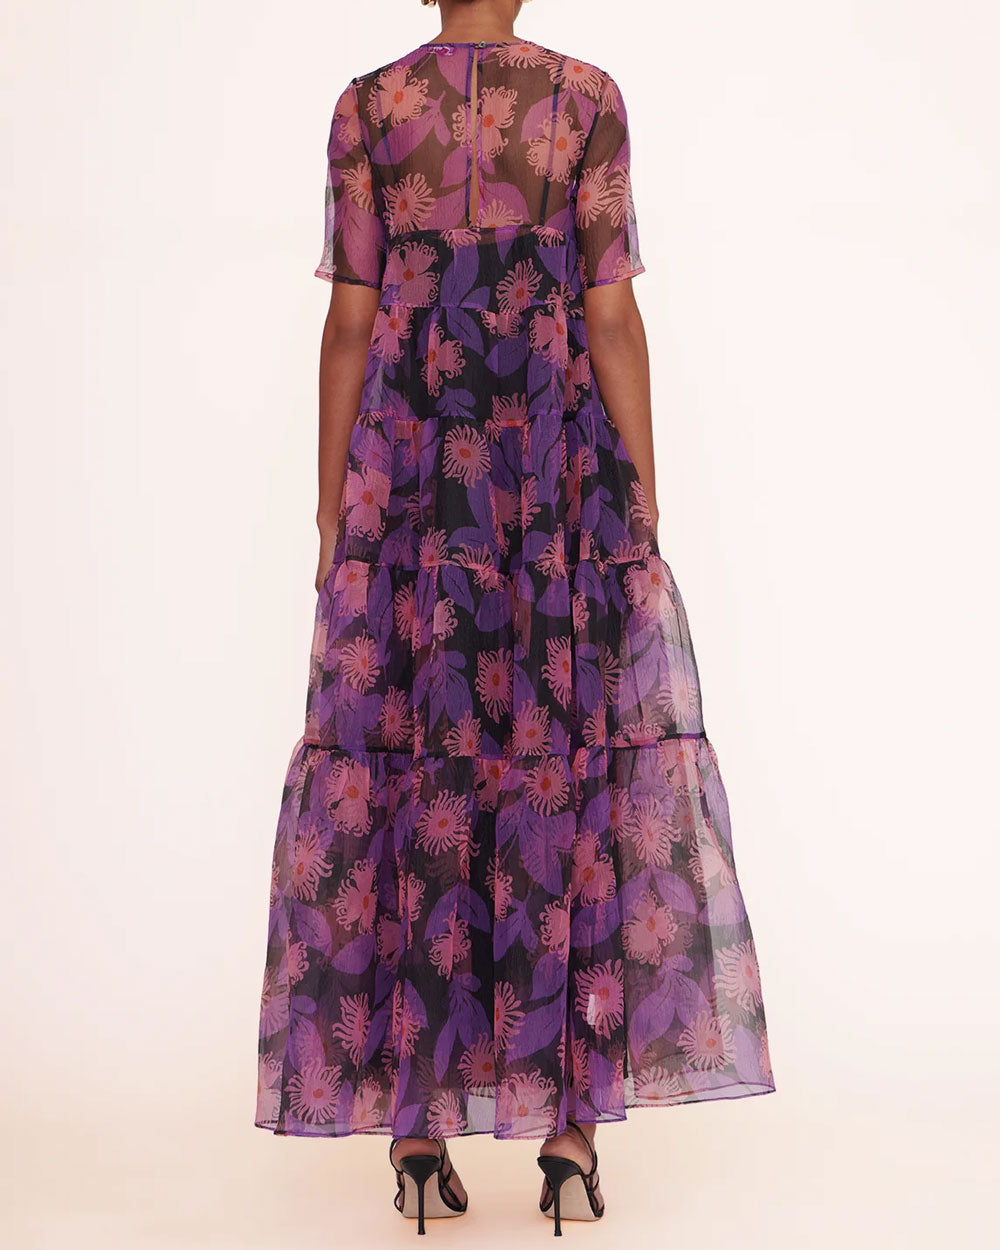 Acid Floral Hyacinth Dress